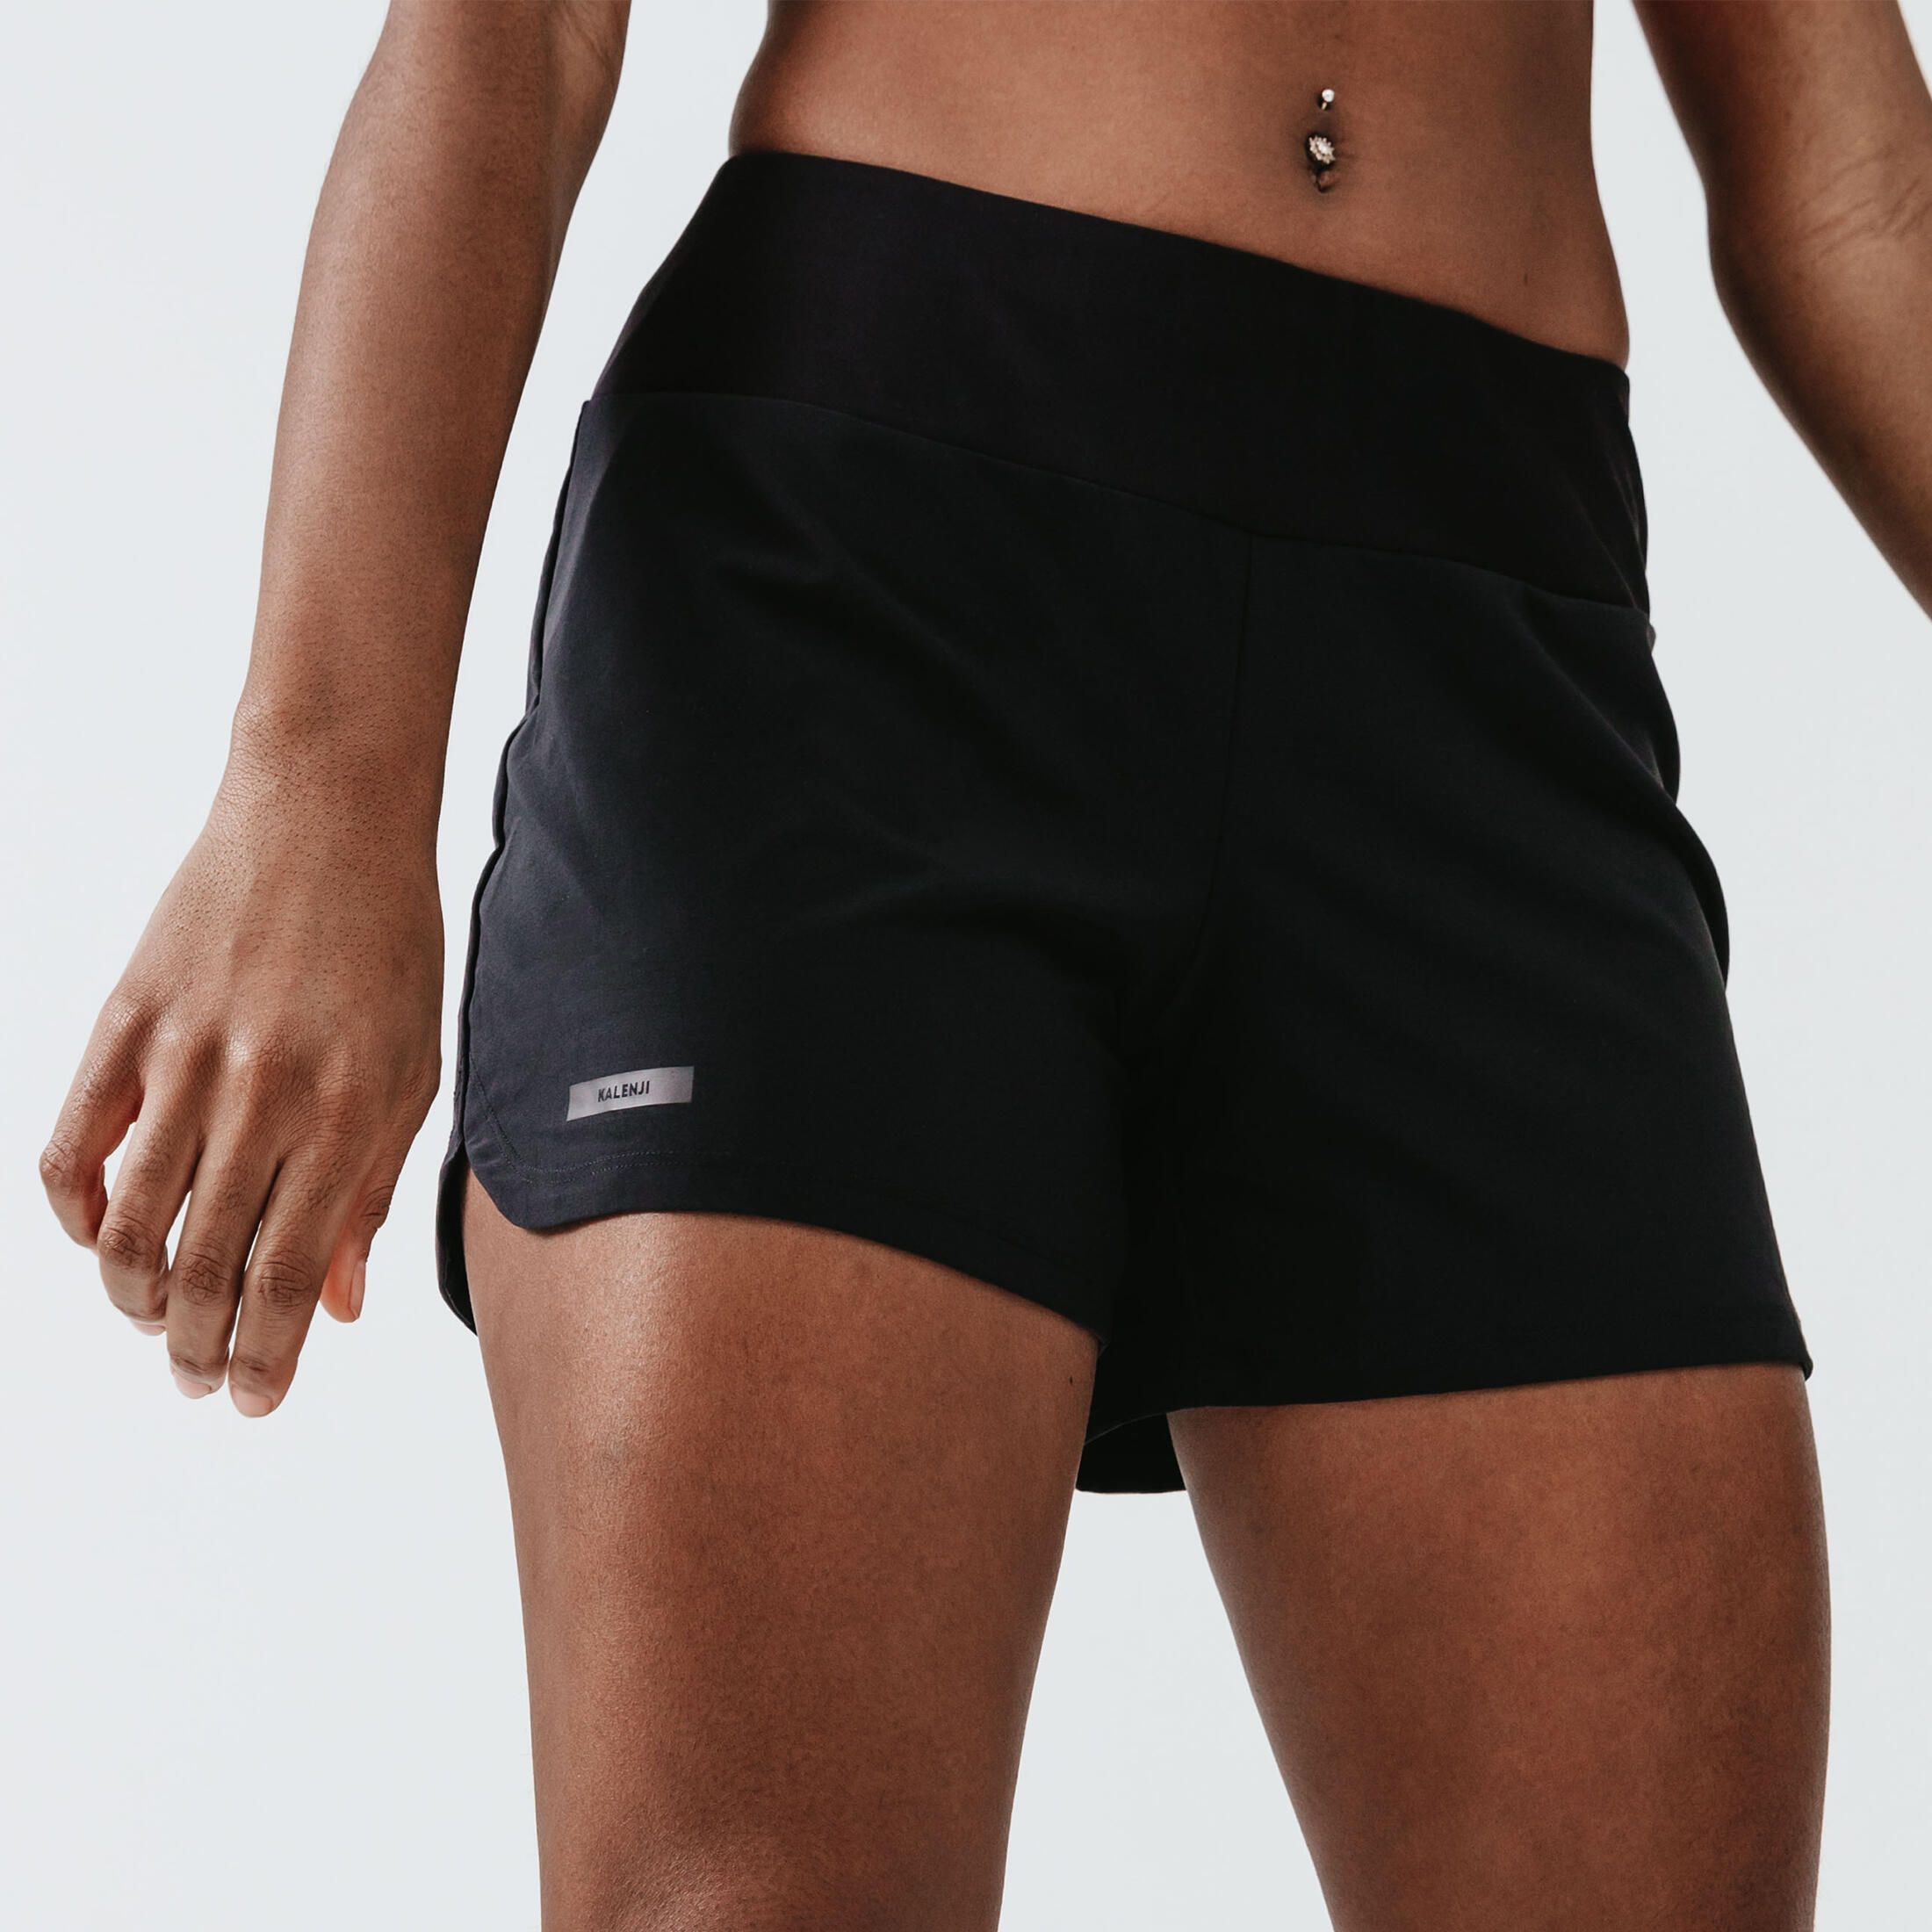 DECATHLON femme noir violet Contraste Taille Sports Running Yoga Shorts S M L XL